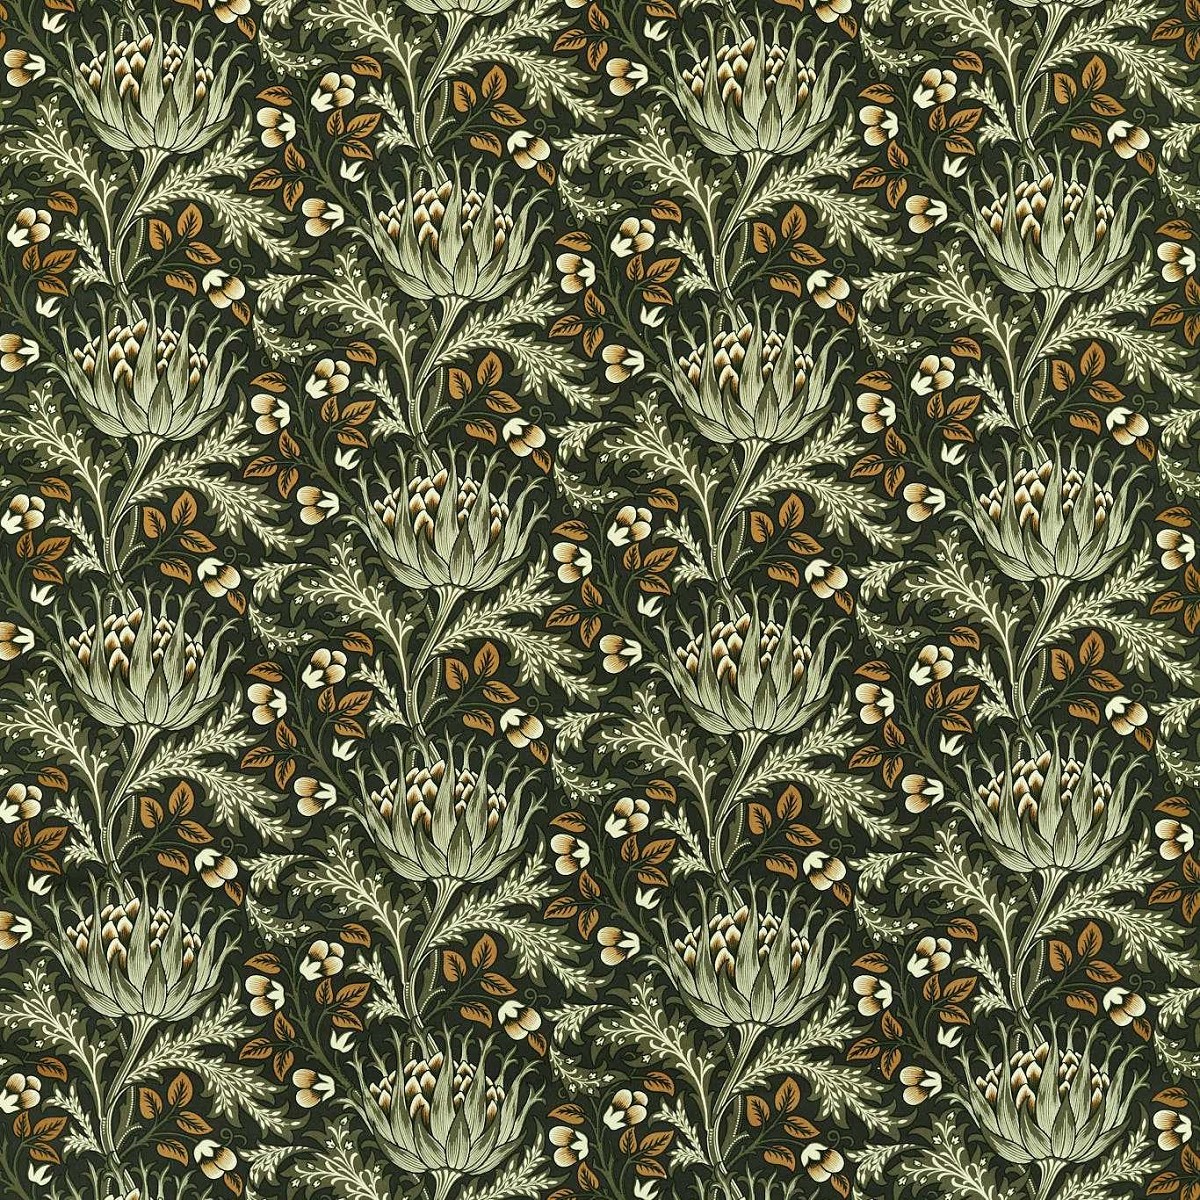 Artichoke Velvet Tump Fabric by William Morris & Co.